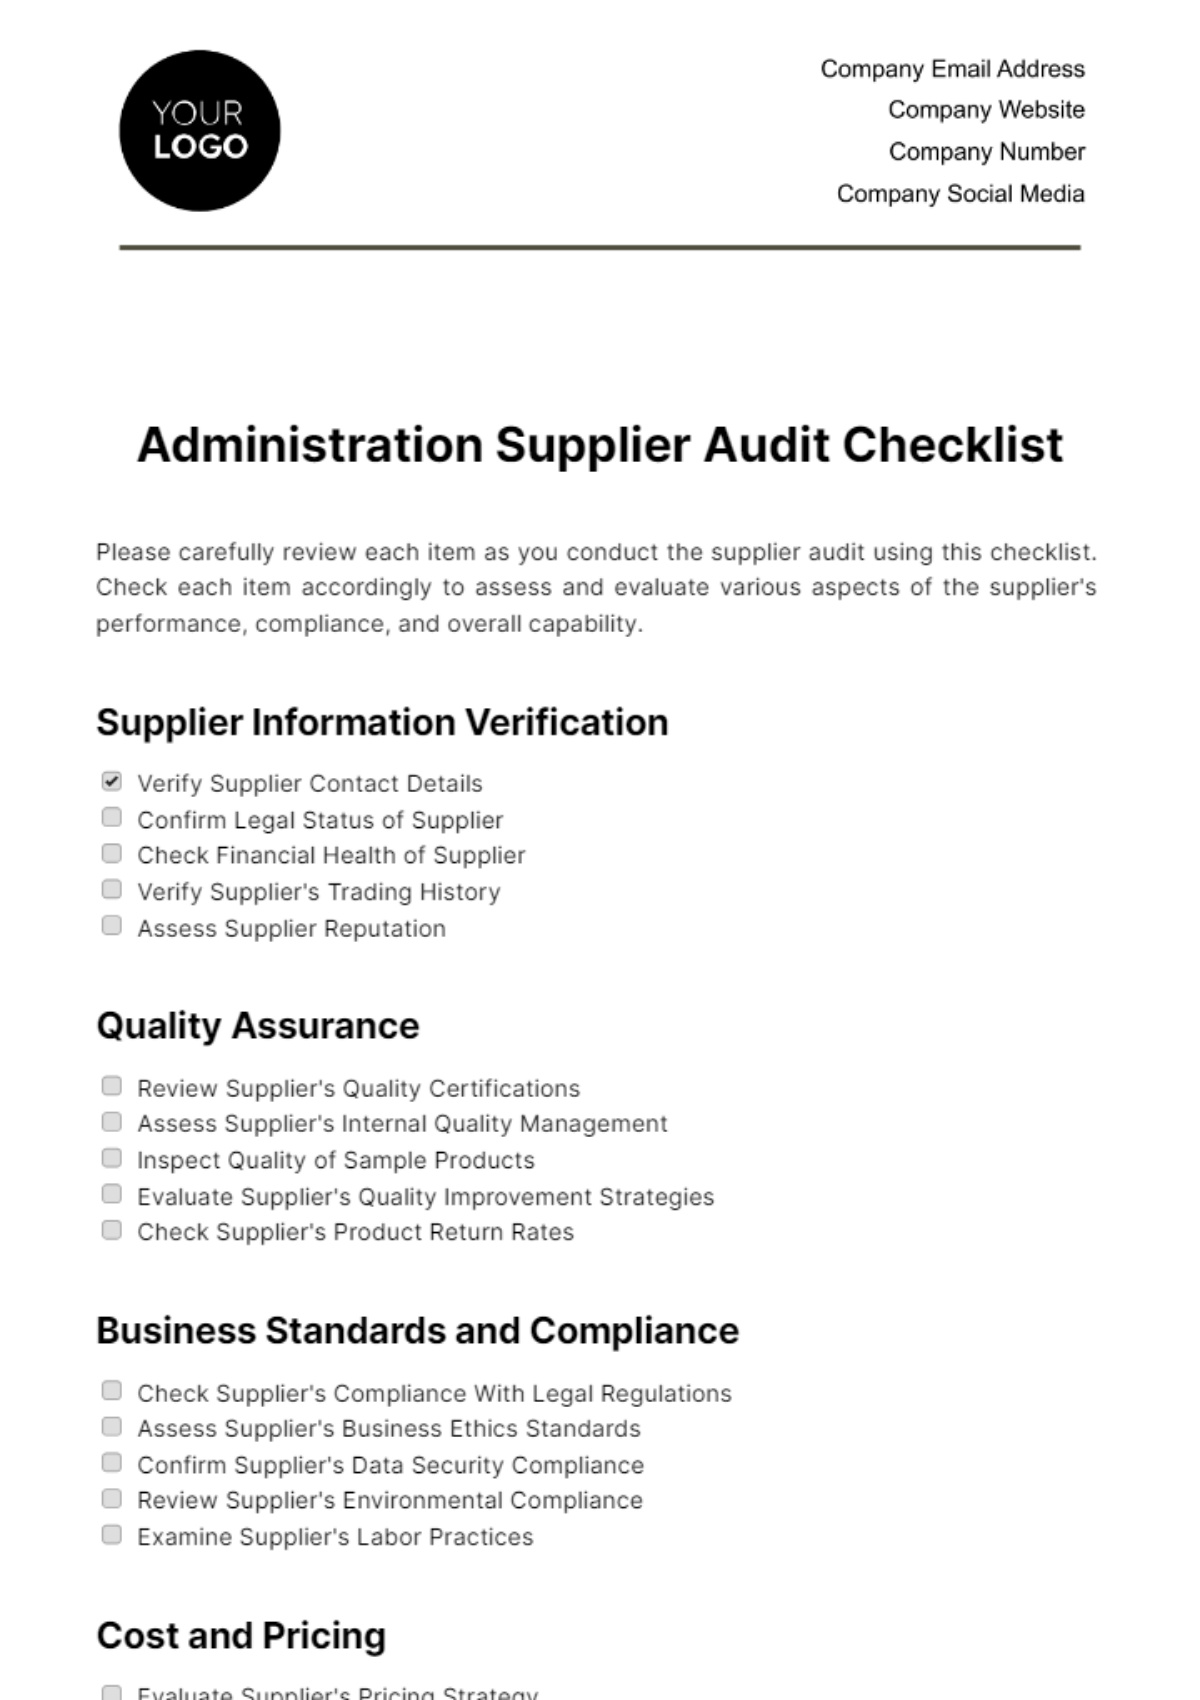 Administration Supplier Audit Checklist Template